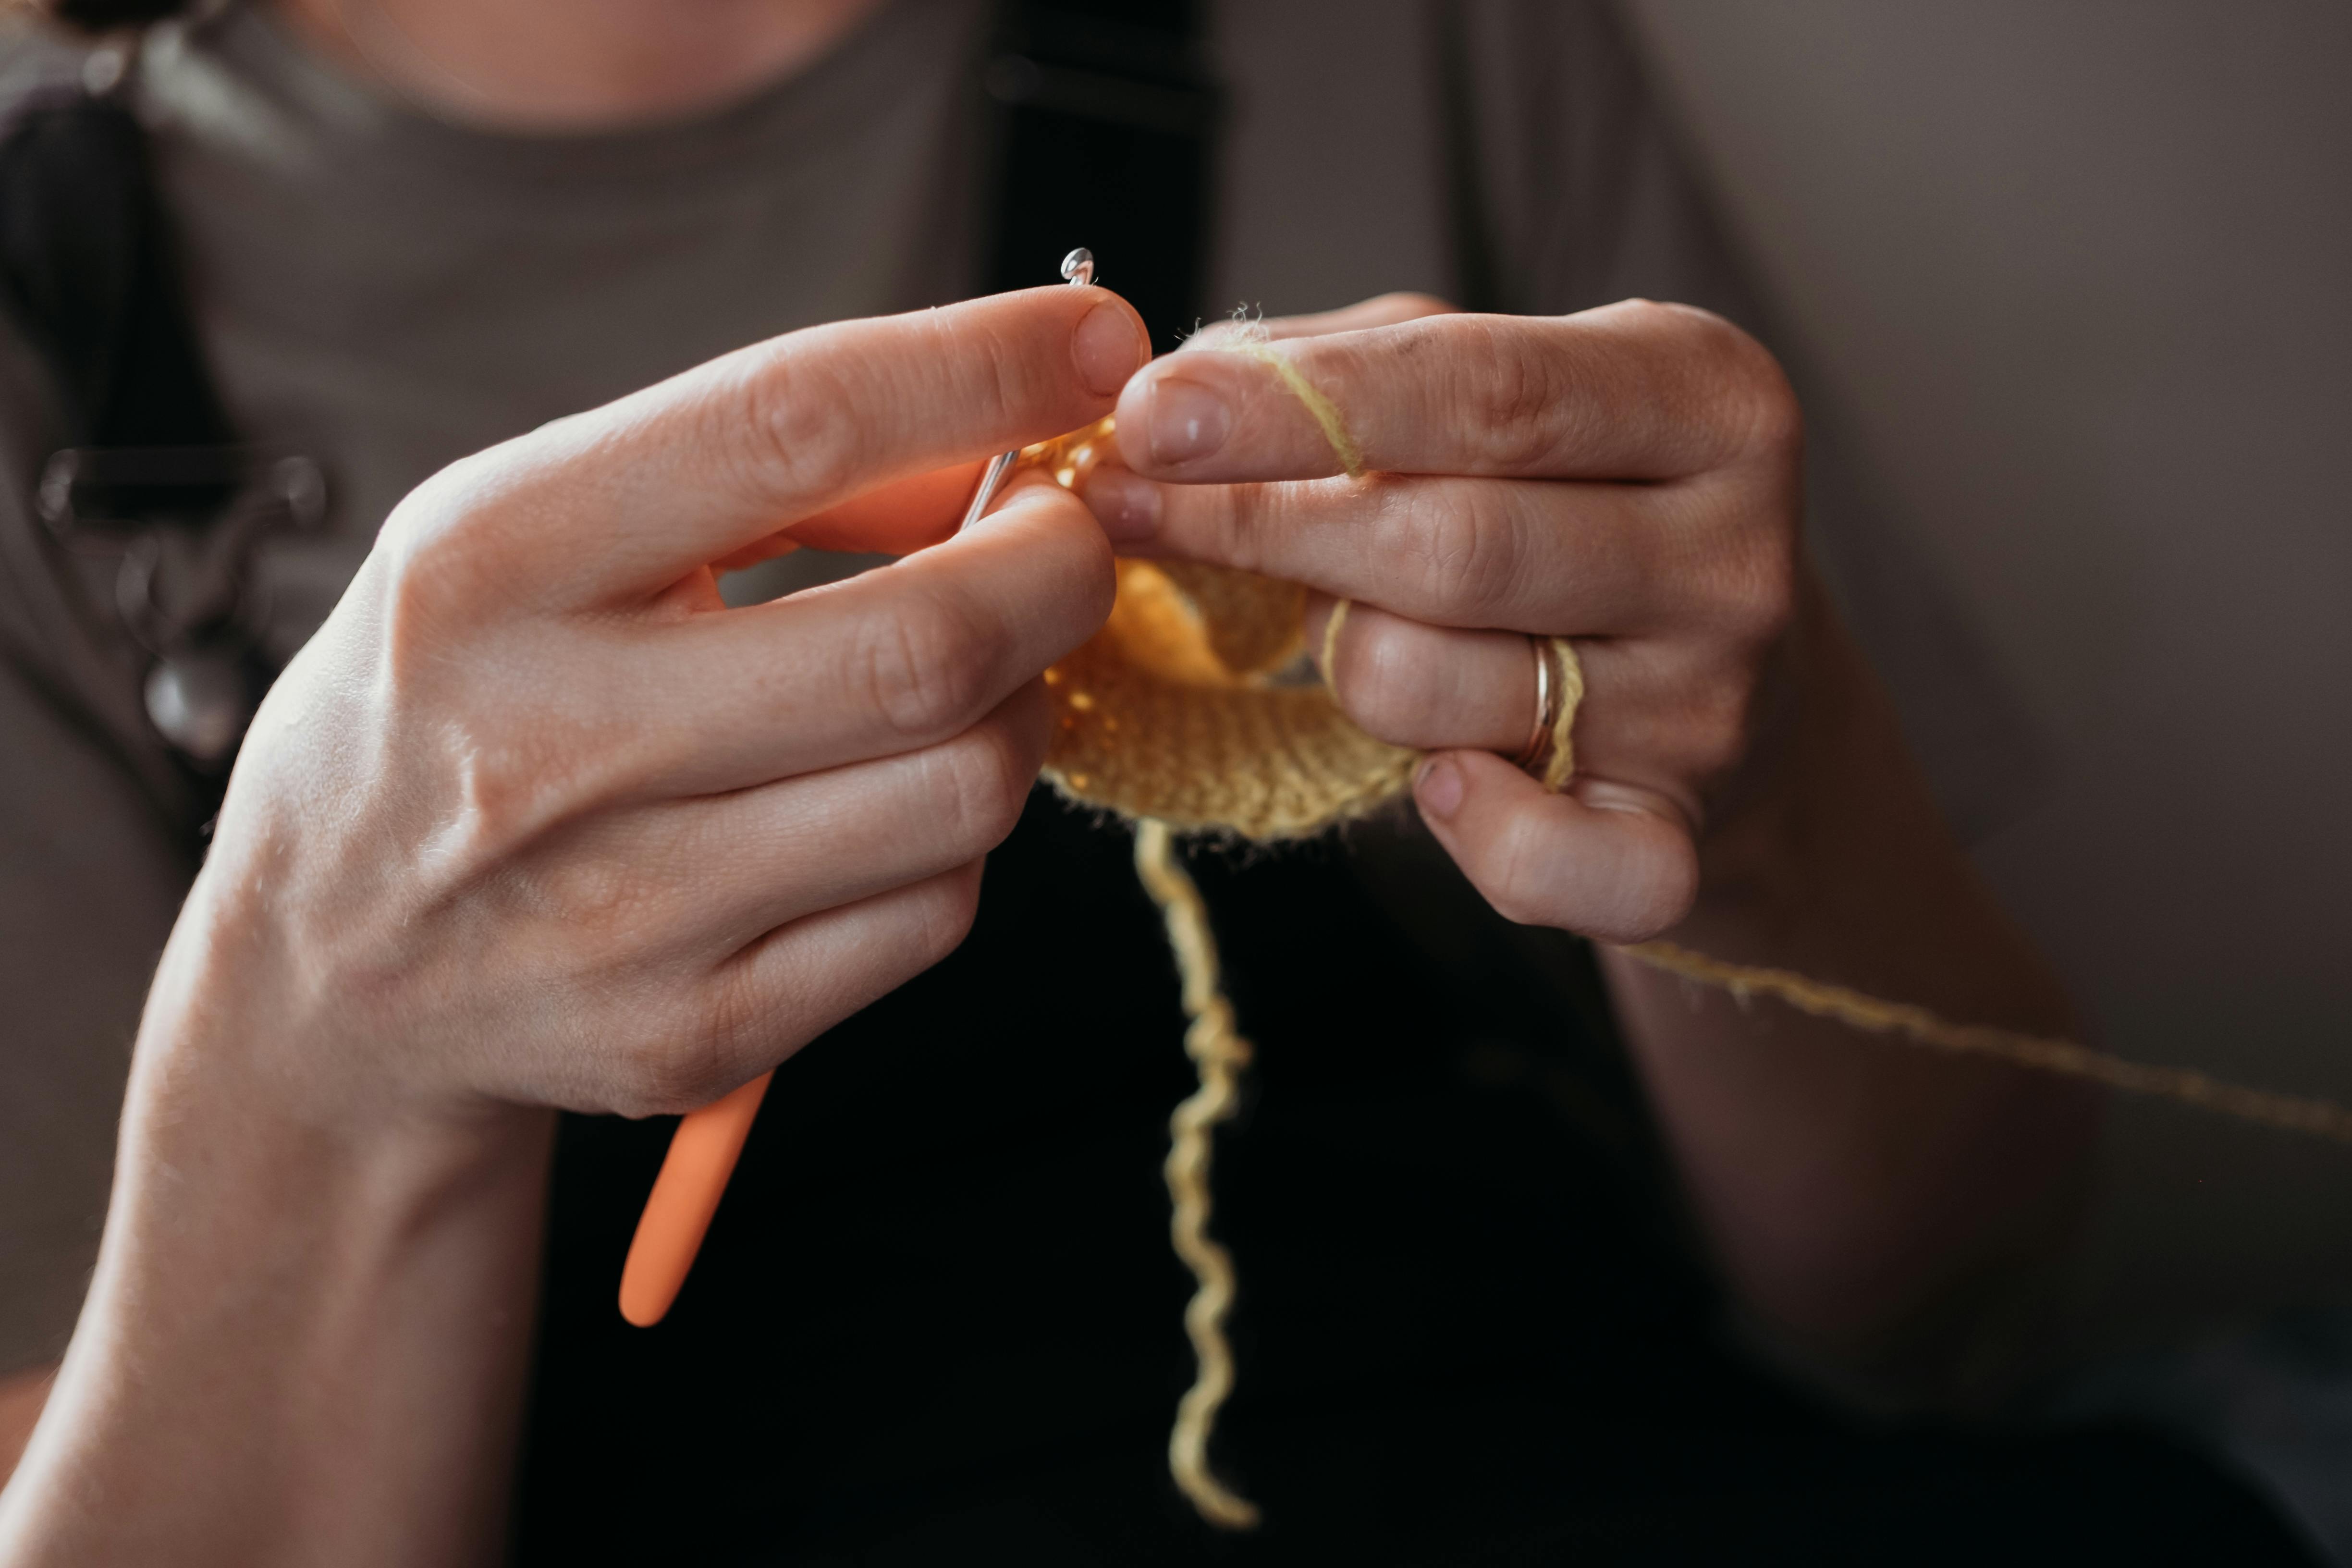  womans hands crocheting an item